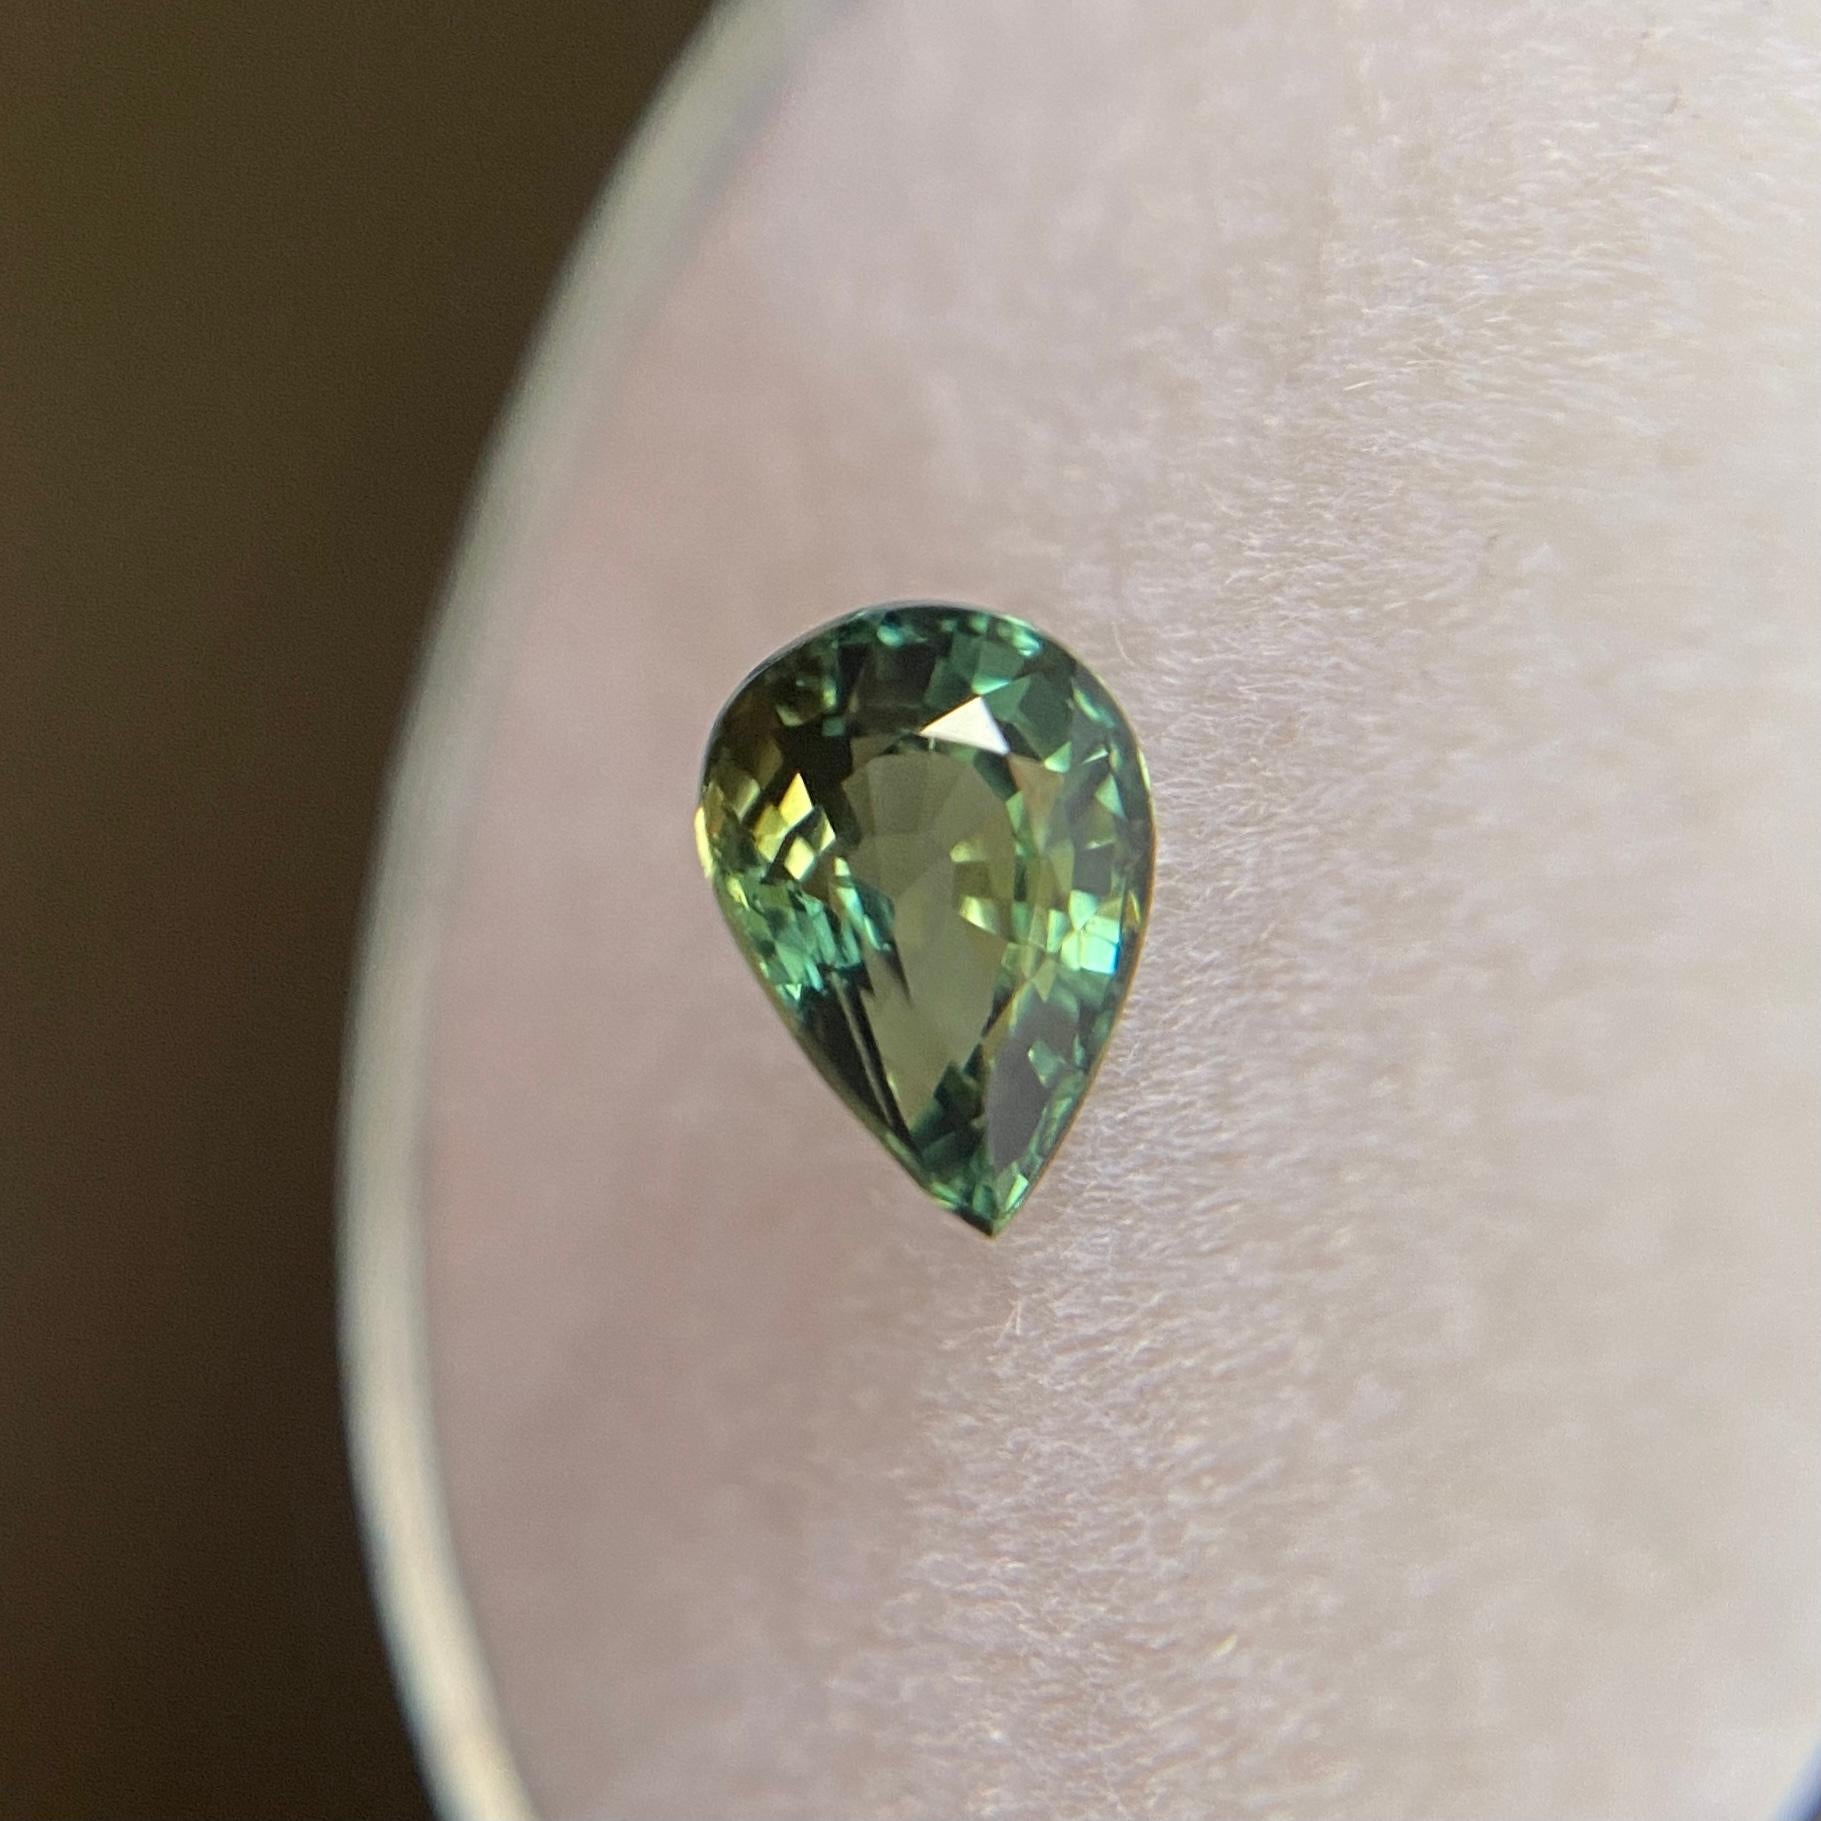 greenish blue gemstone